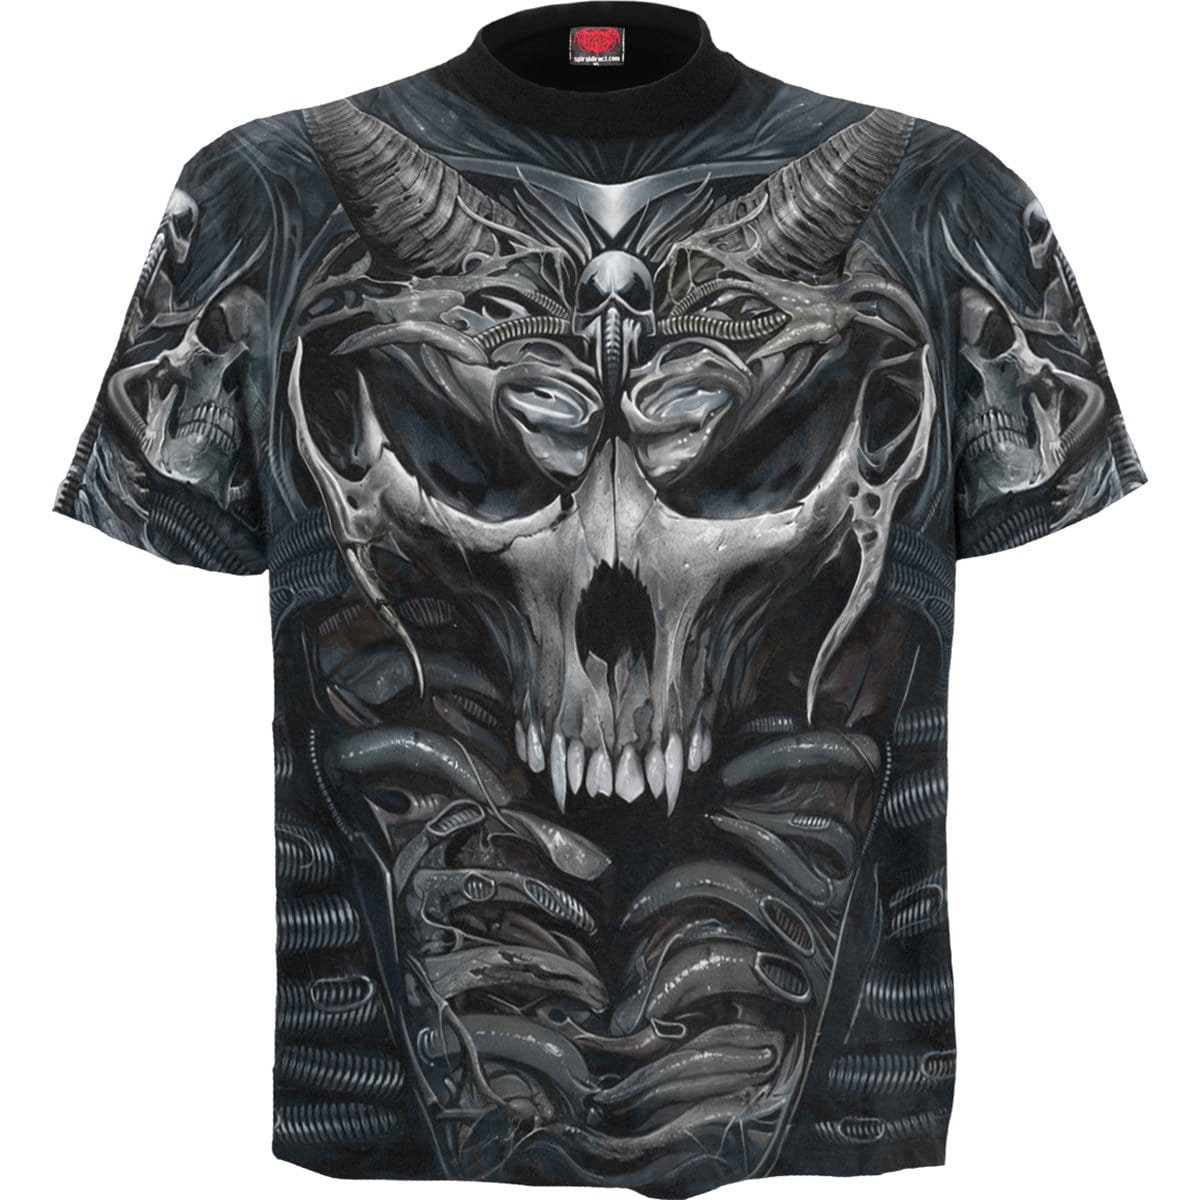 SKULL ARMOUR - Allover T-Shirt Black - Spiral USA